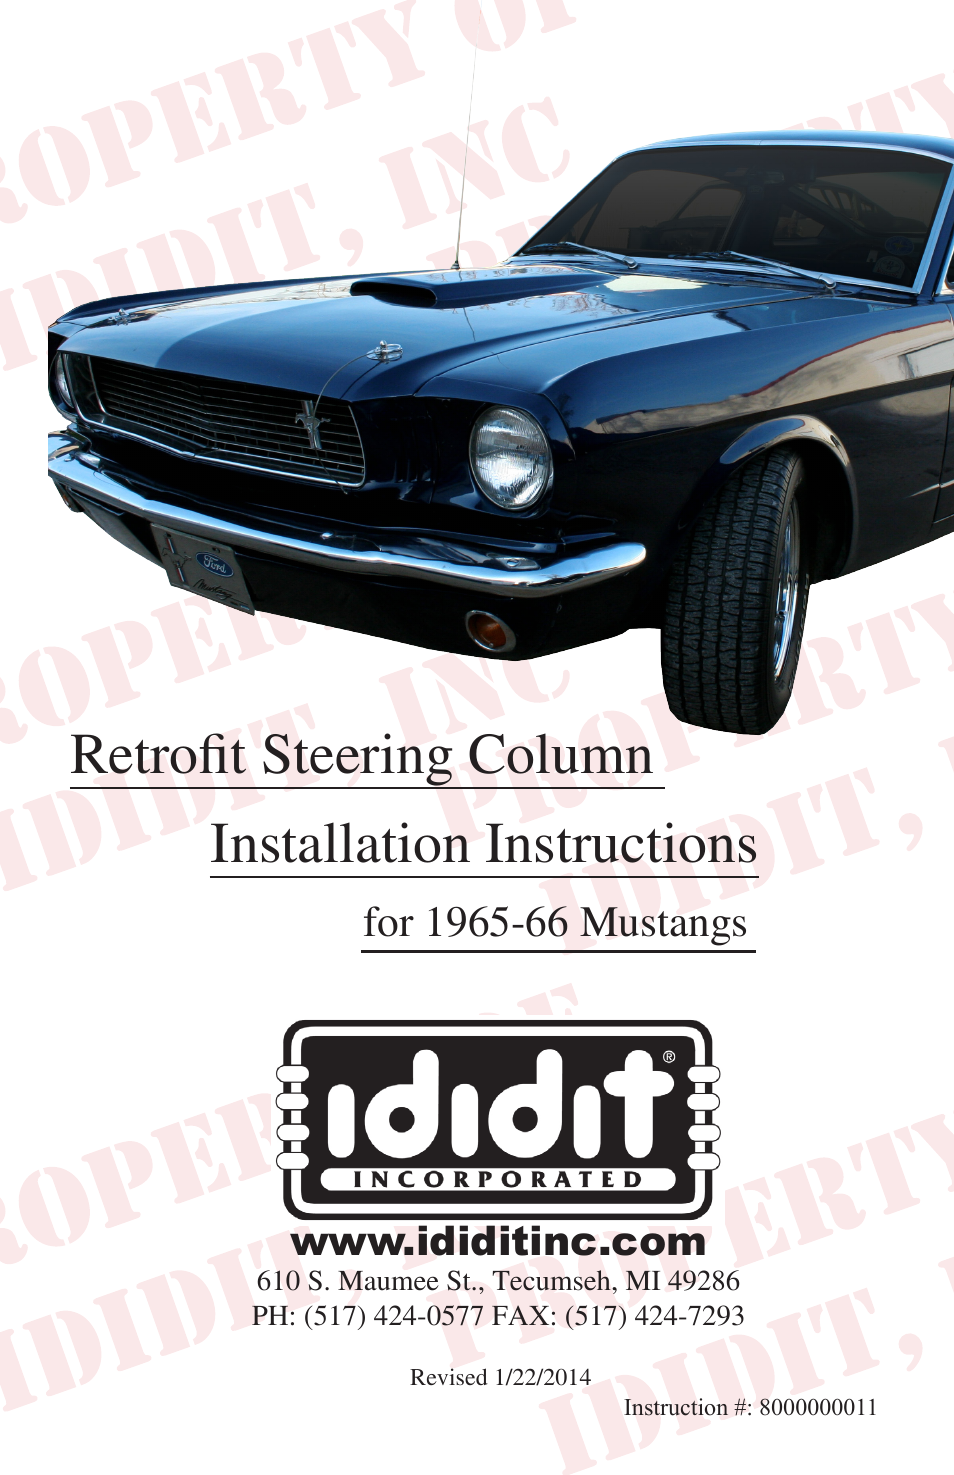 Retrofit Steering Column: 1965-66 Mustang